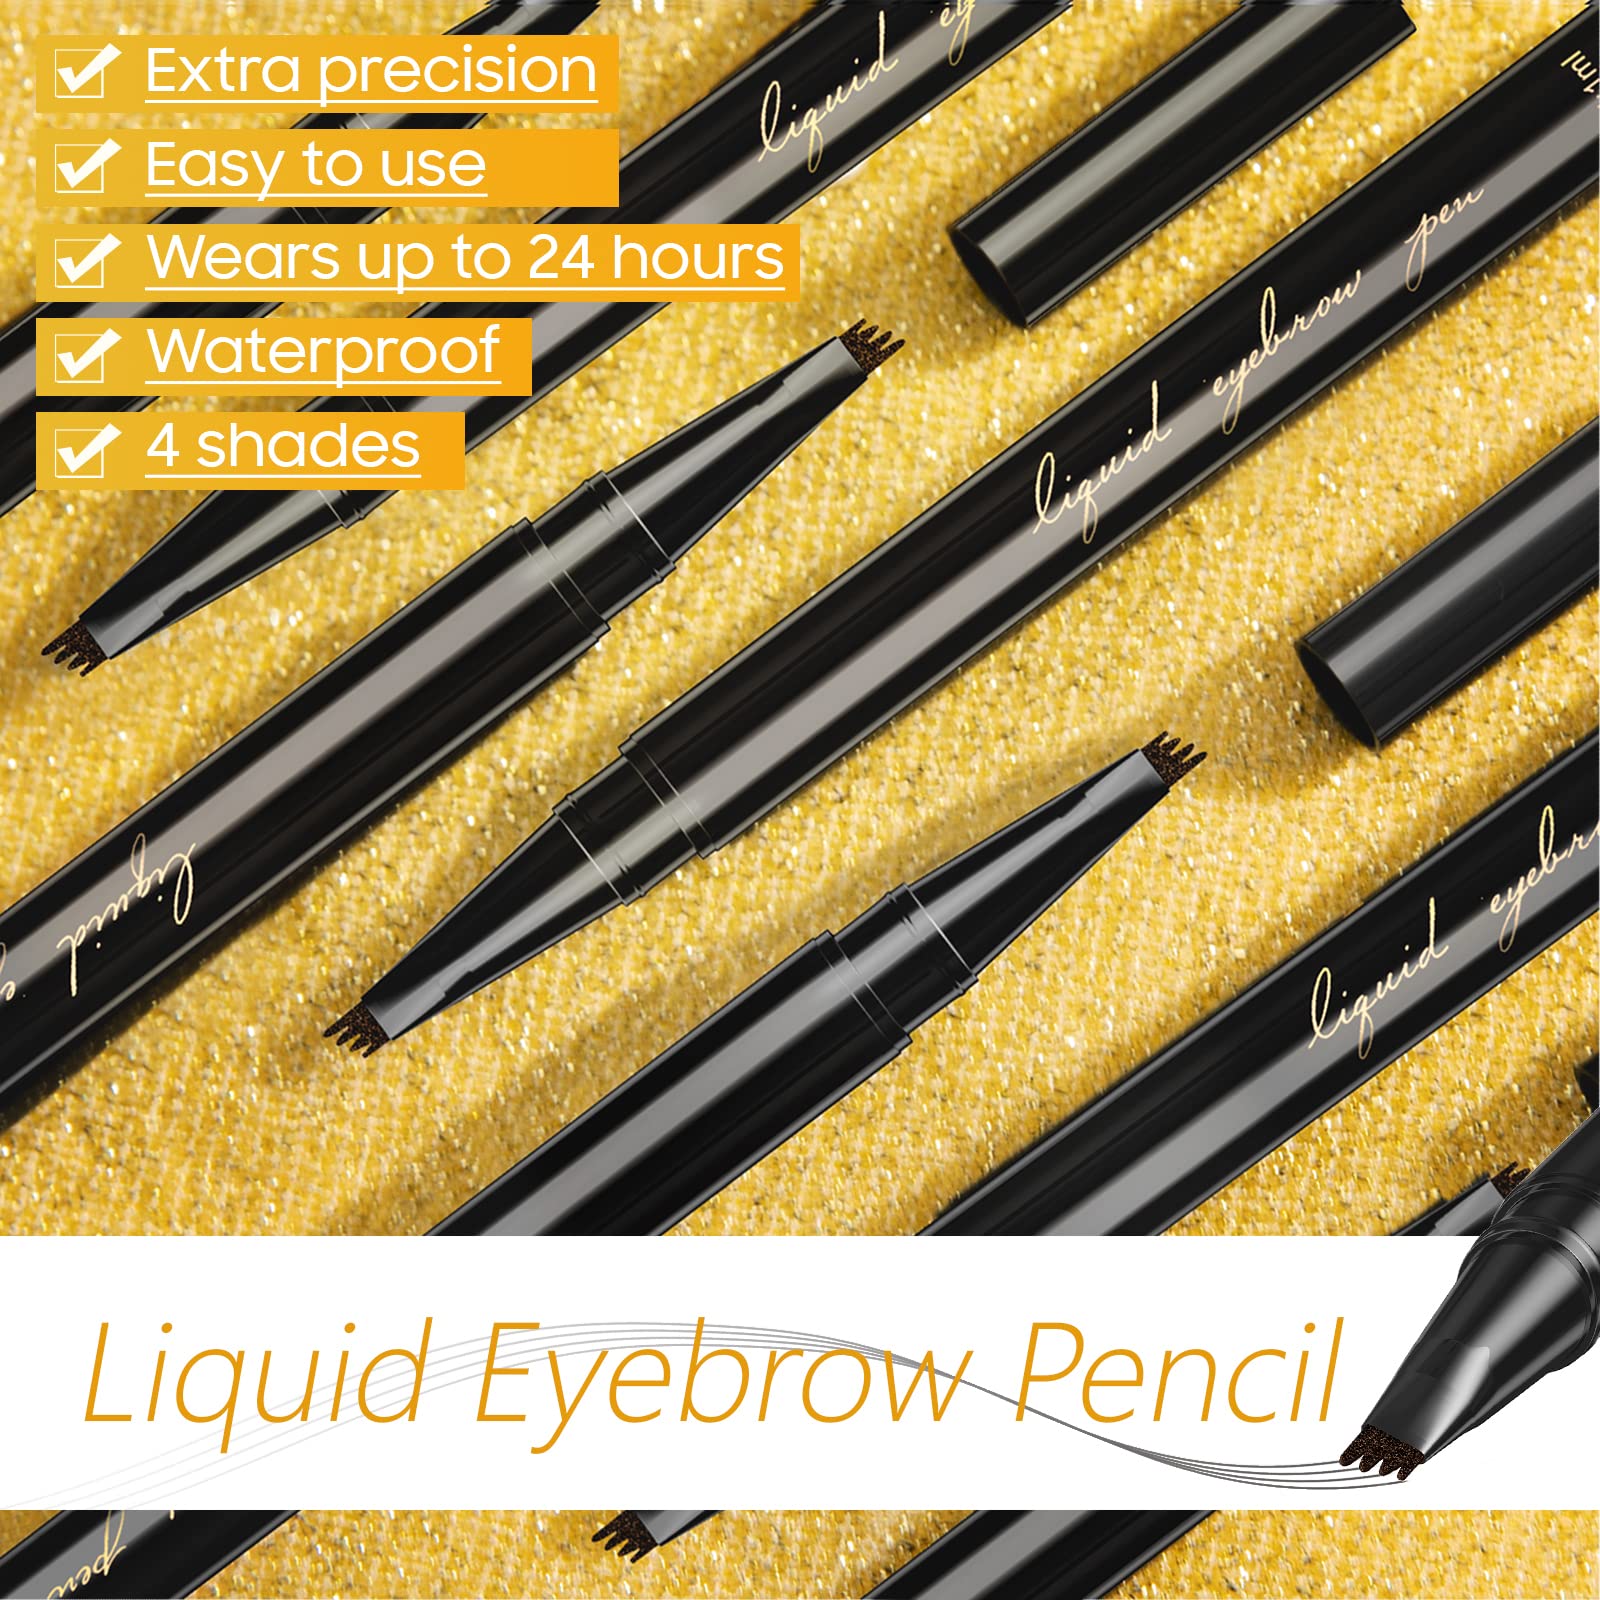 Eyebrow Pencil Eyebrow Microblading Pen - Eyebrow Makeup Micro 4 Point Brow Pen Lift & Snatch Makeup Pen Long-Lasting Waterproof Brow Pen, Creating Natural Looking Brows Effortlessly (02 Dark Brown)